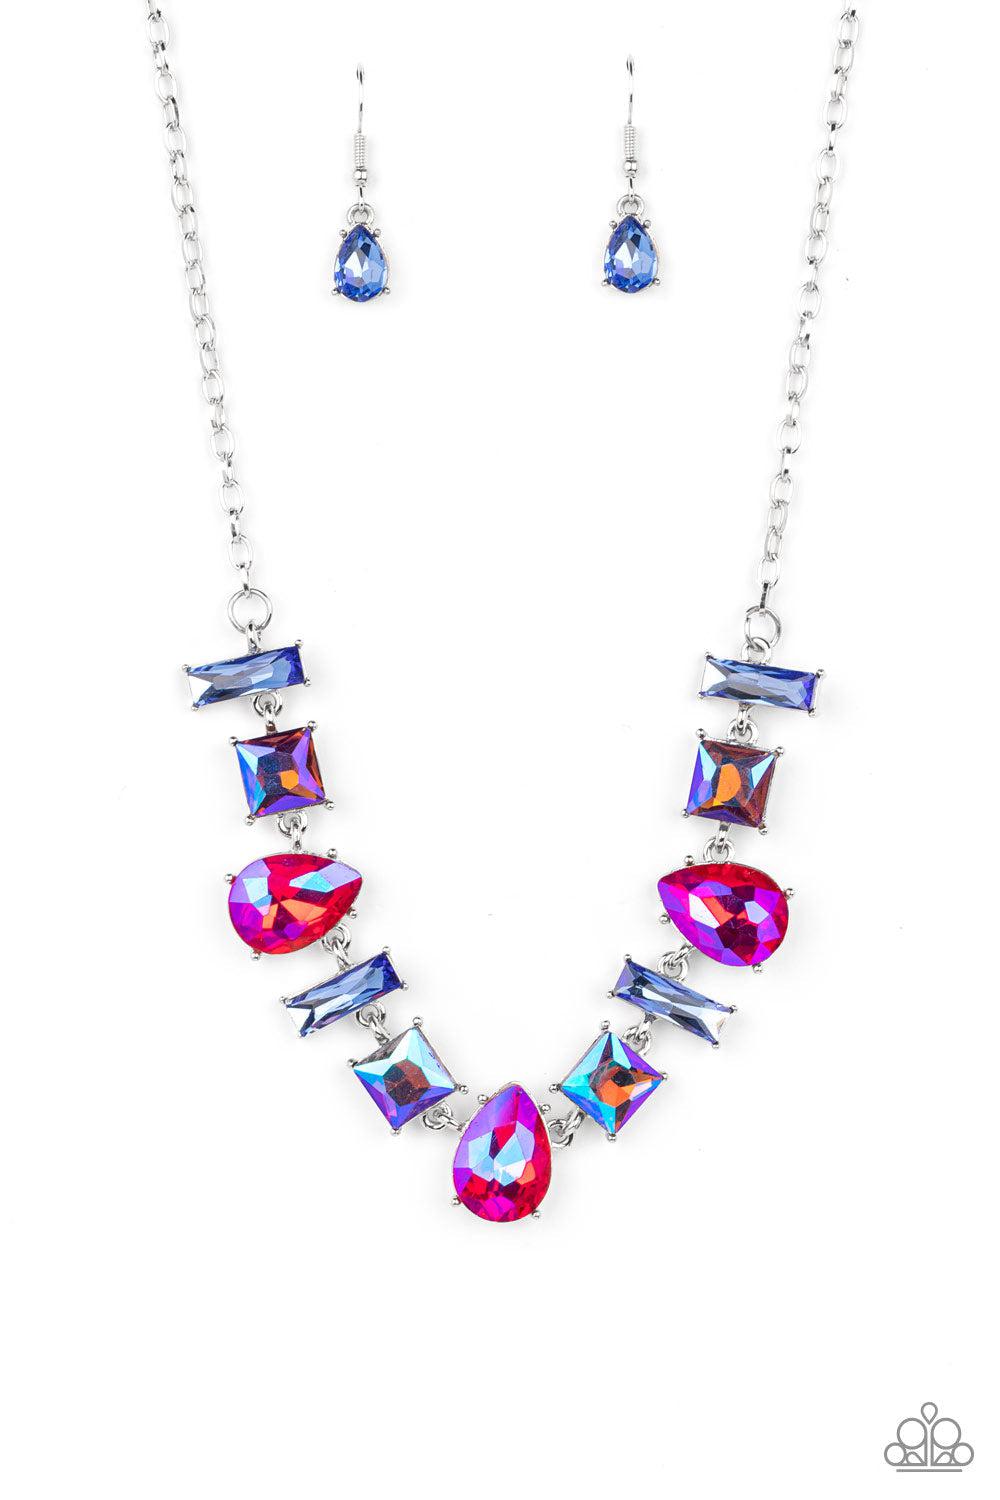 Interstellar Ice Multi Necklace - Paparazzi Accessories- lightbox - CarasShop.com - $5 Jewelry by Cara Jewels